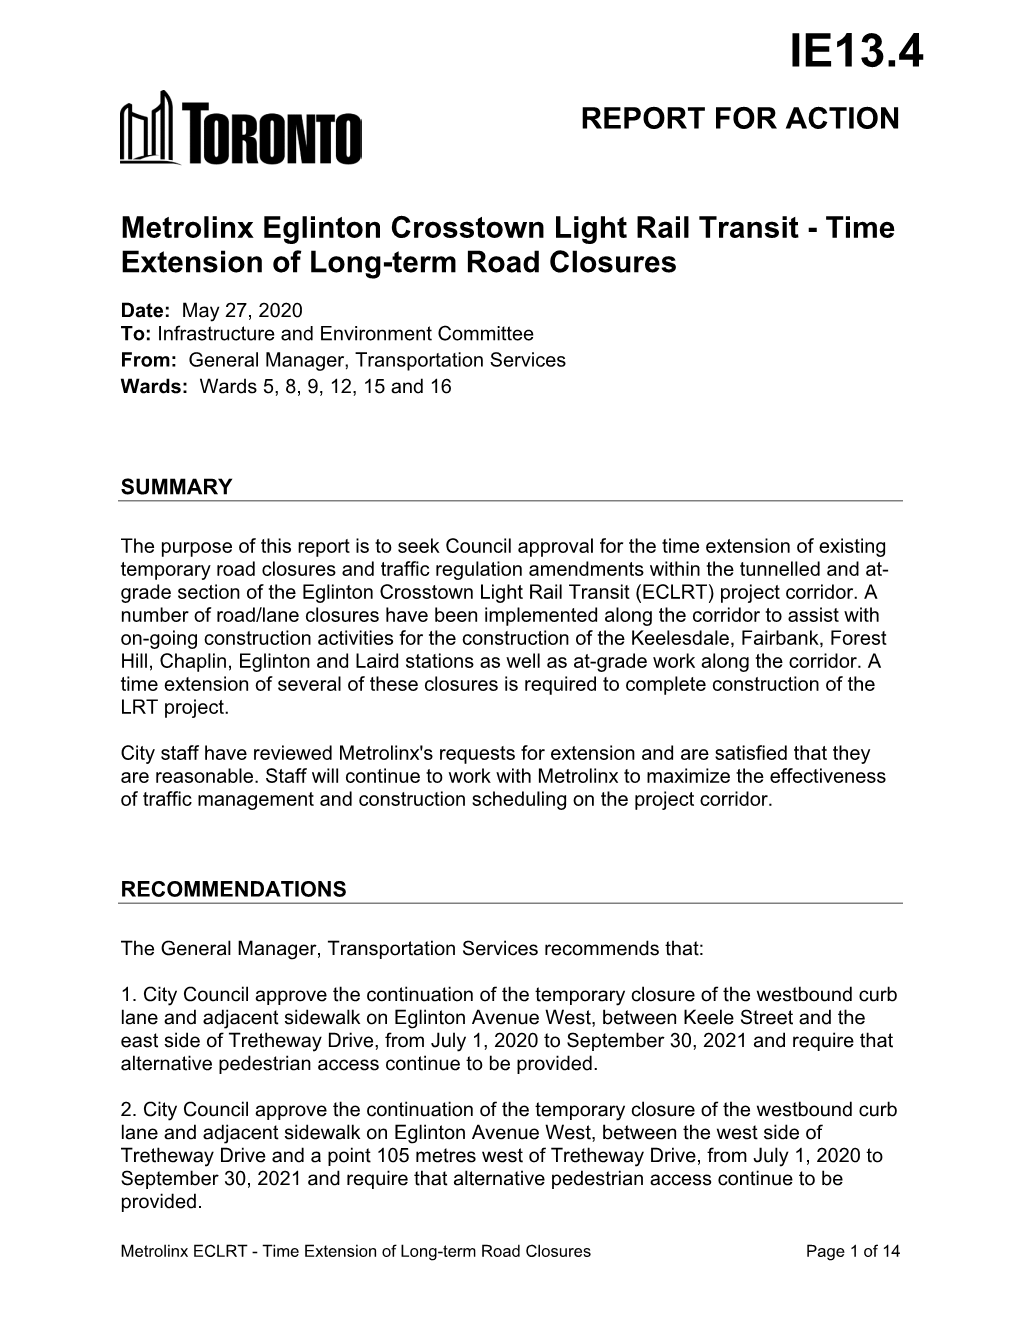 Metrolinx Eglinton Crosstown Light Rail Transit - Time Extension of Long-Term Road Closures